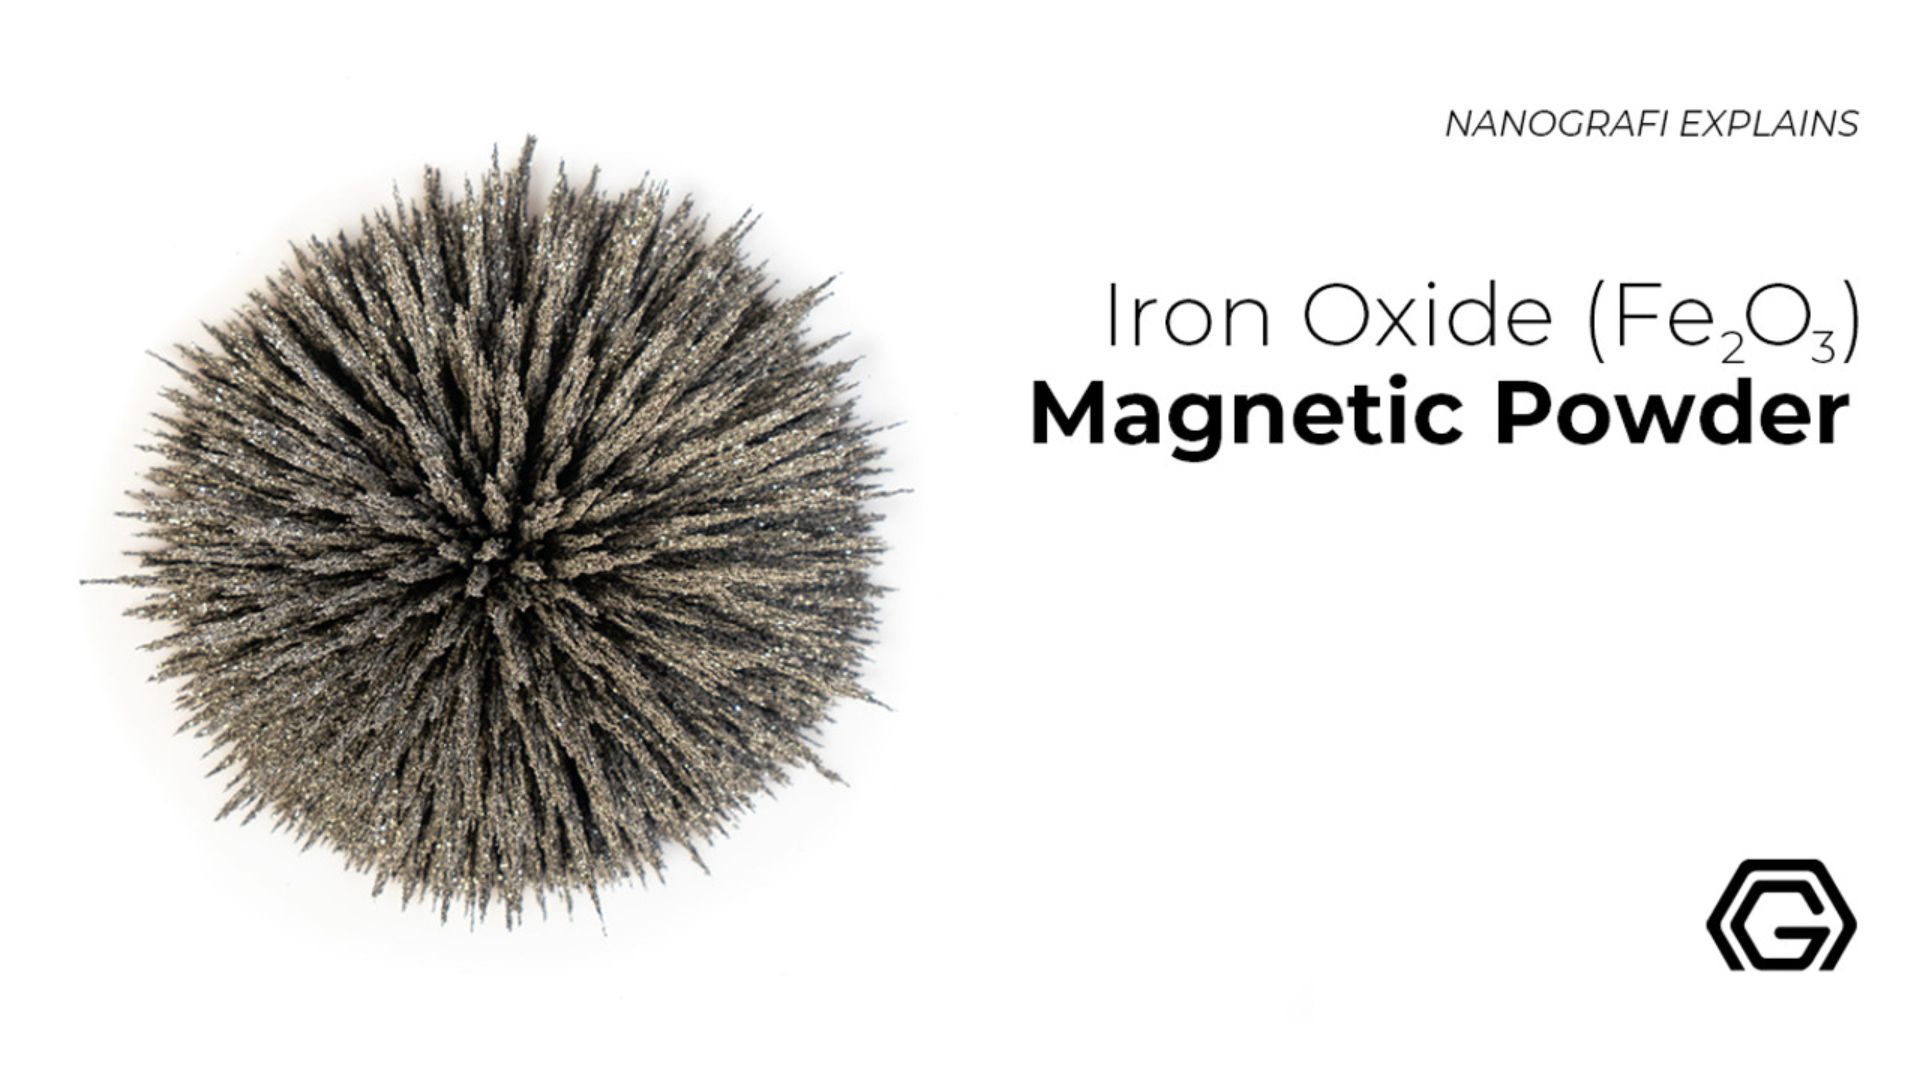 Iron oxide Fe2O3 magnetic powder